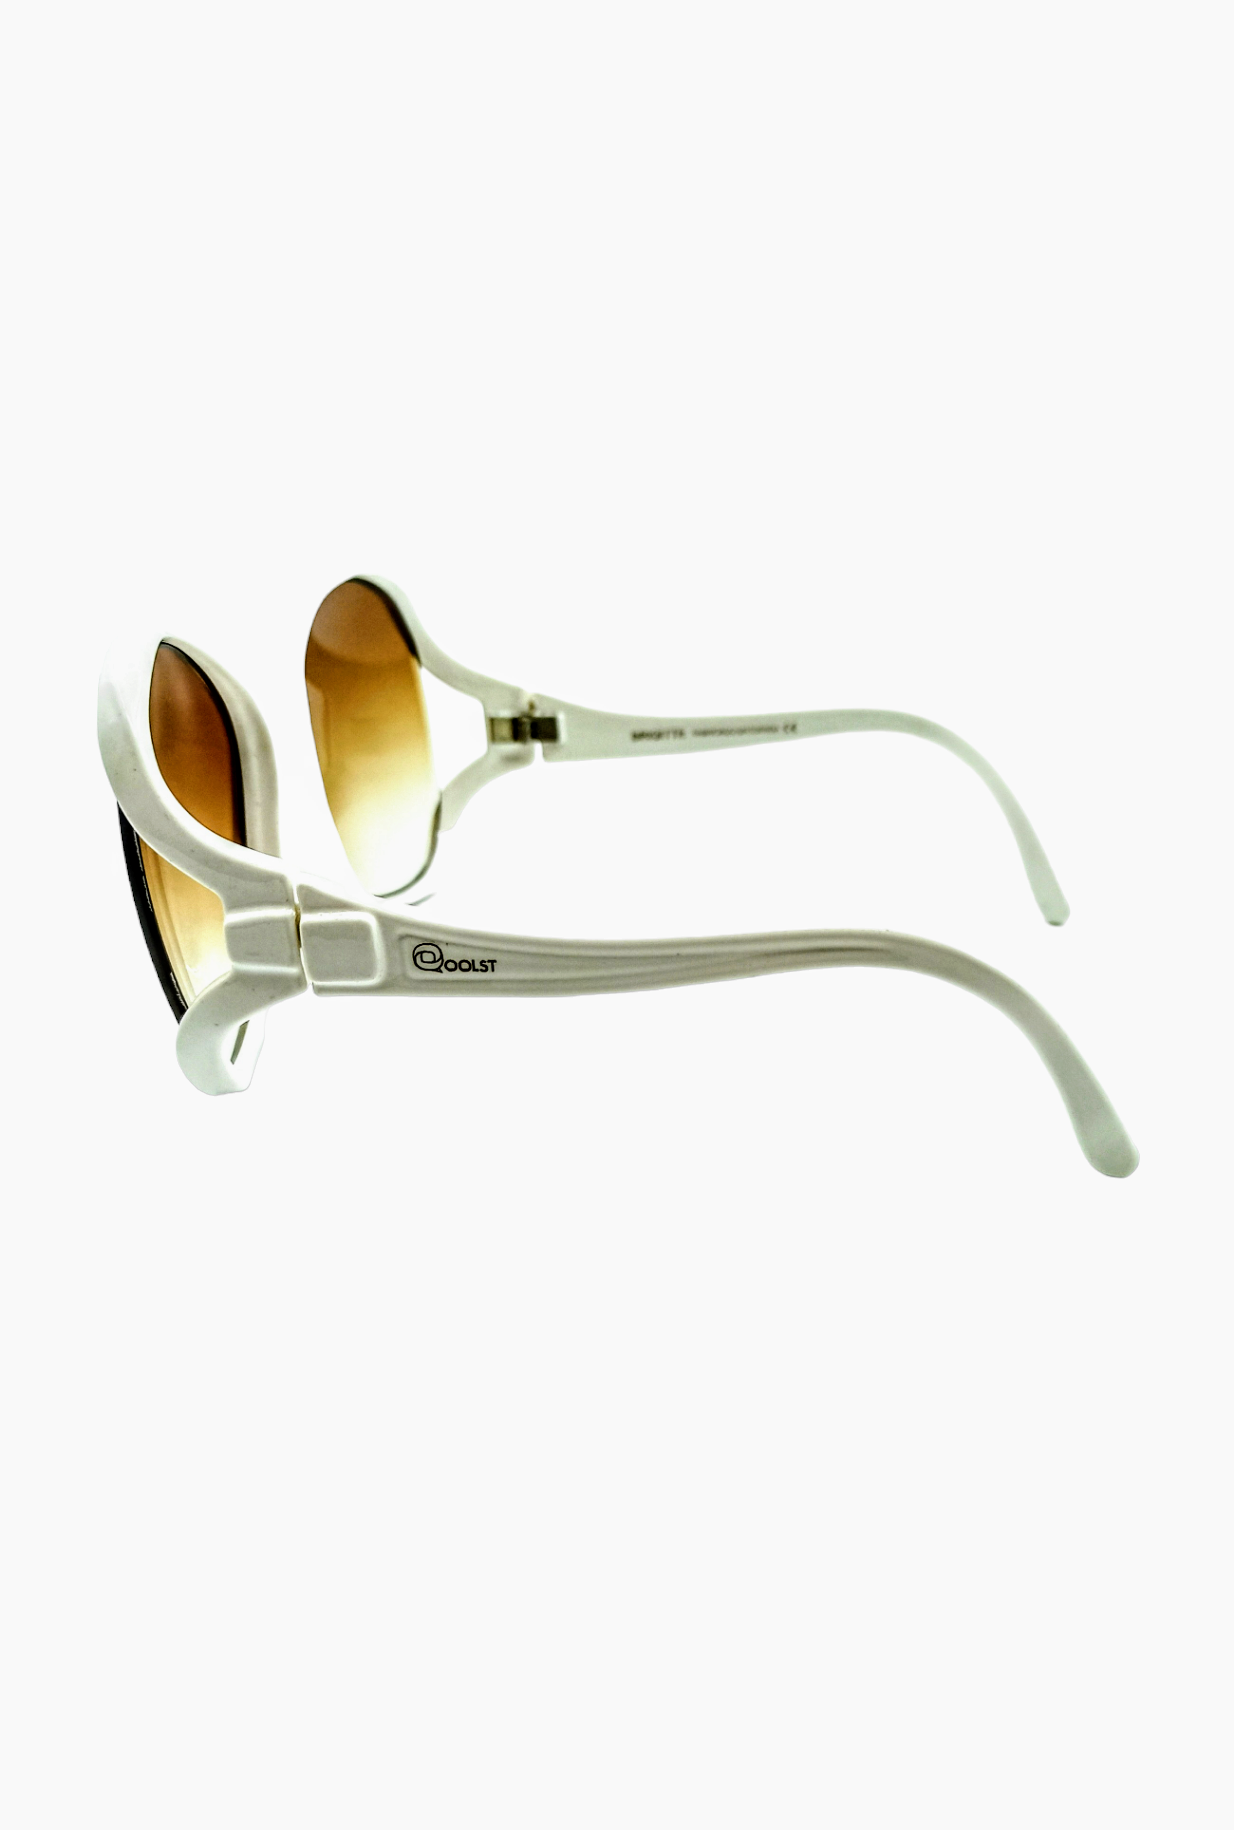 Vintage sunglasses for women made in Spain Qoolst Brigitte 